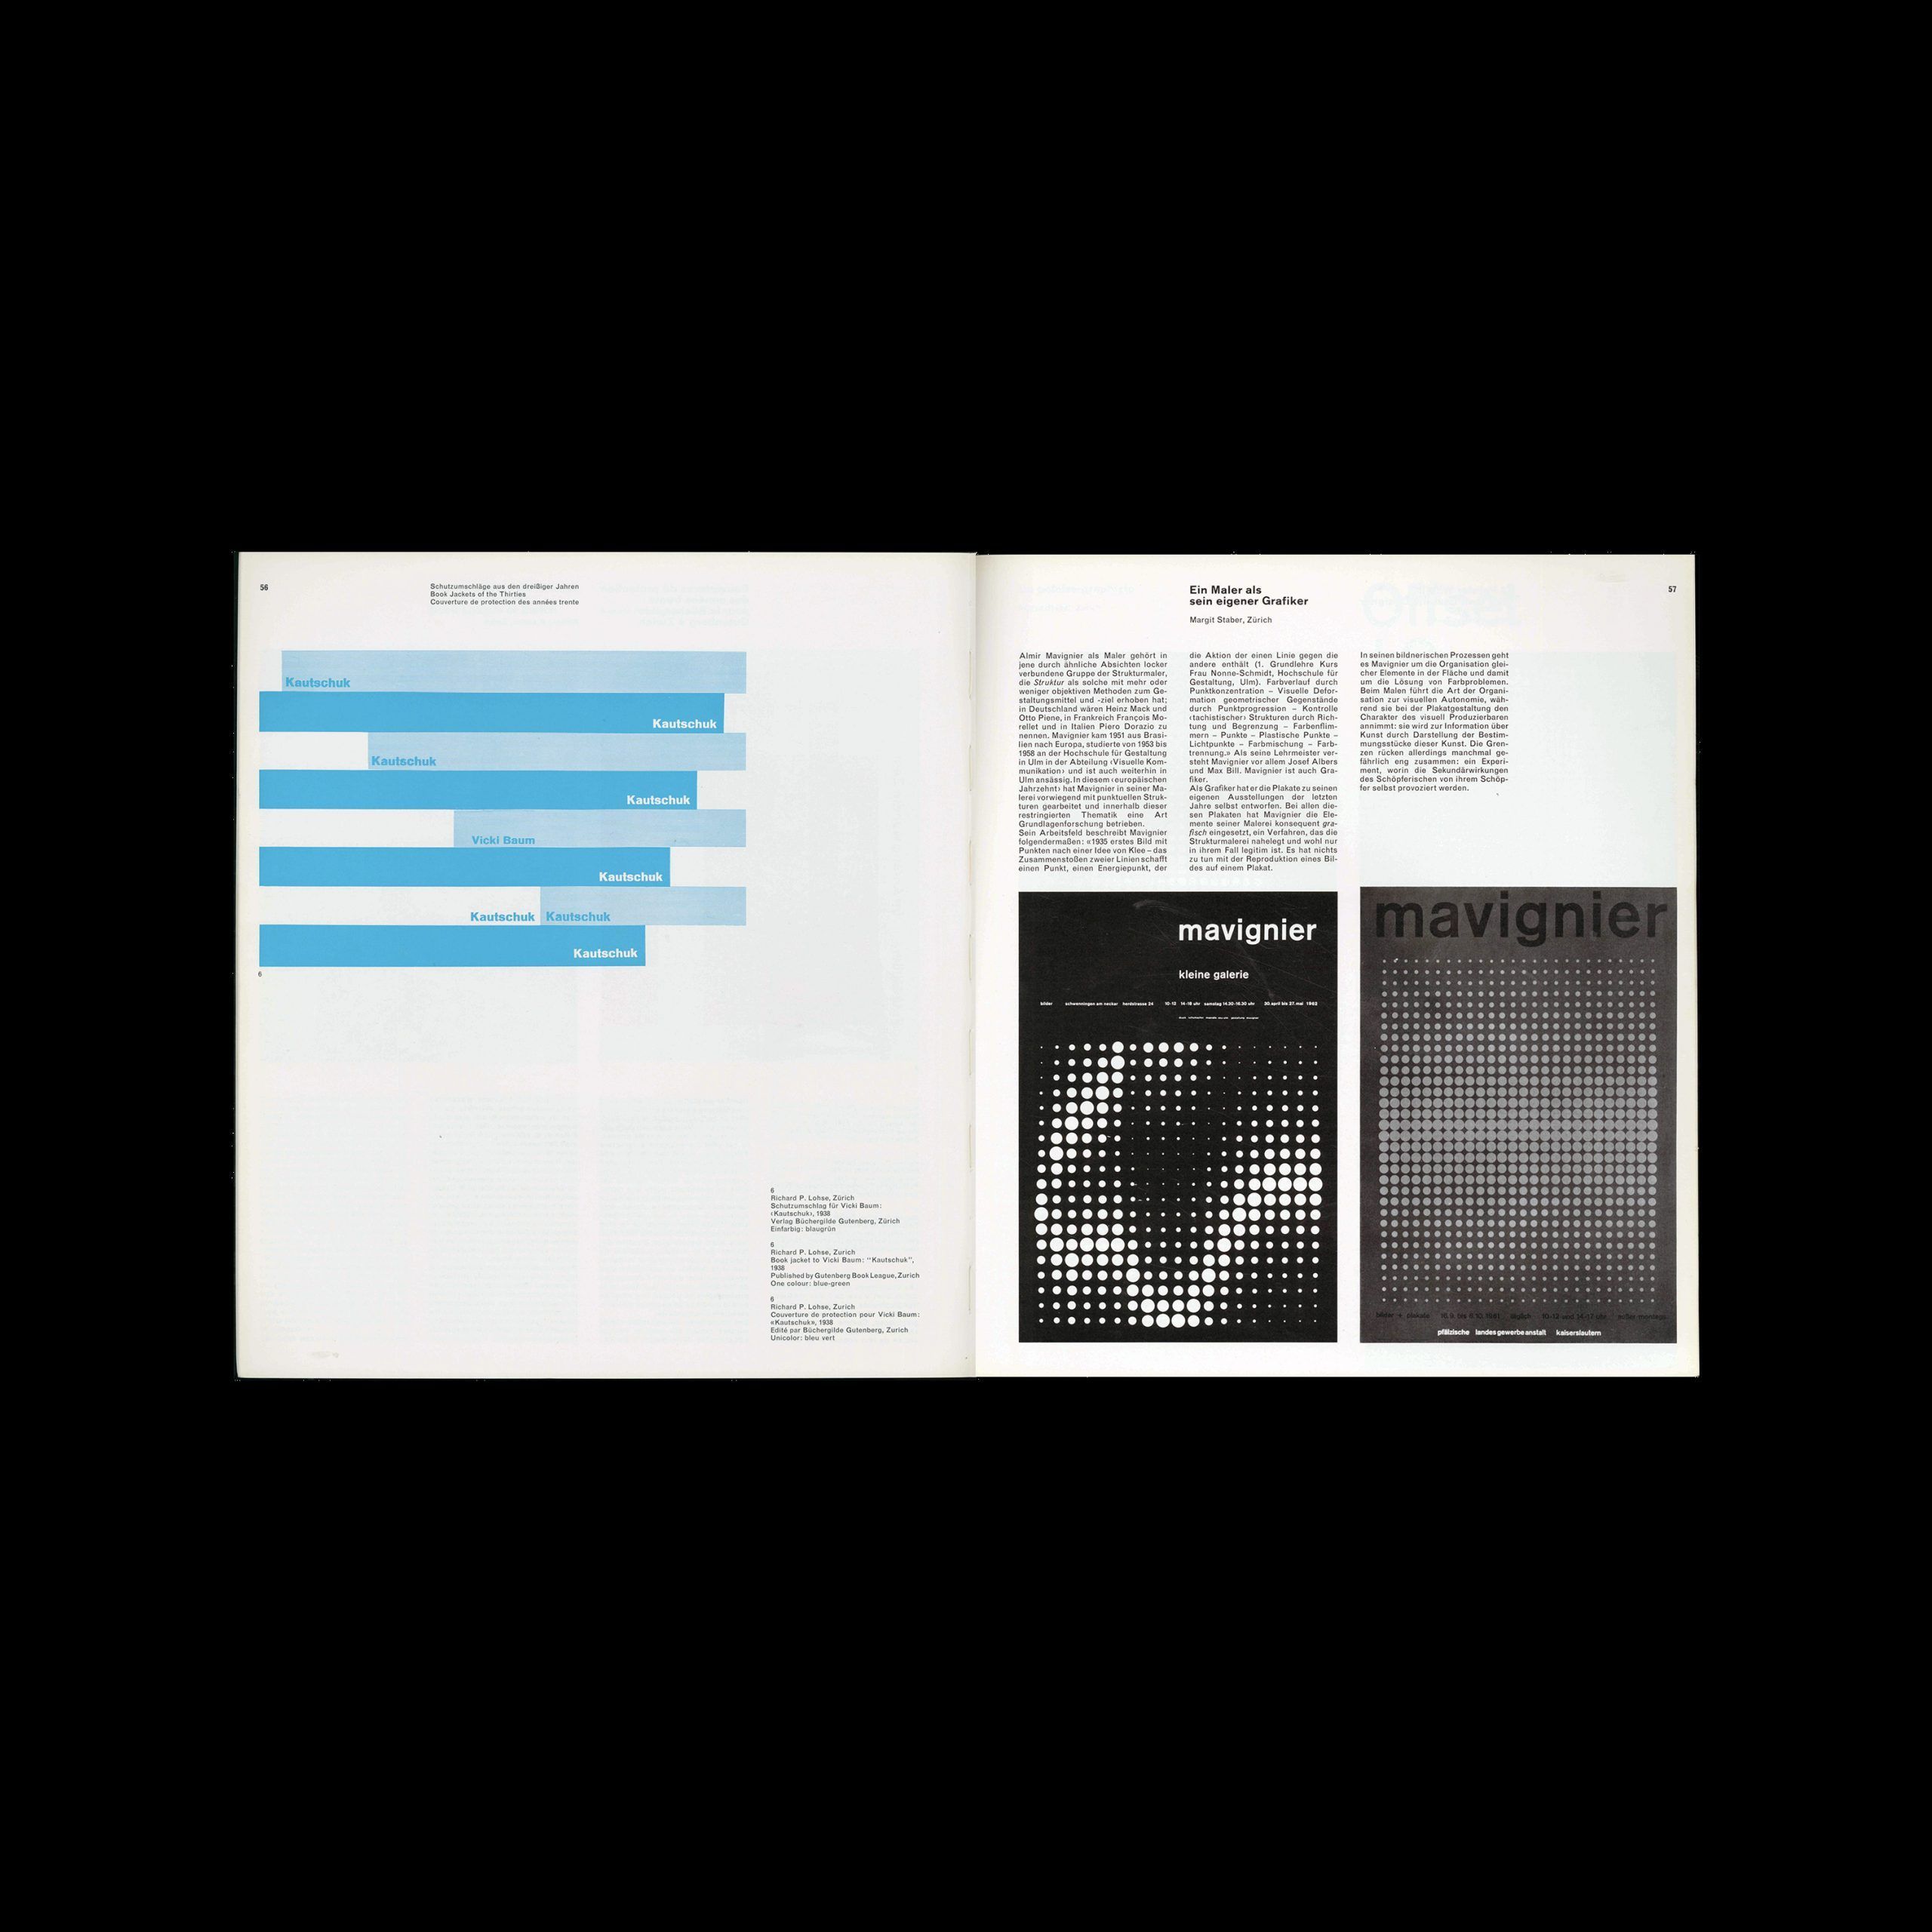 Neue Grafik / New Graphic Design / Graphisme actuel - No.16, 1963. Josef Müller-Brockmann, Hans Neuburg, Richard Paul Lohse, and Carlo Vivarelli